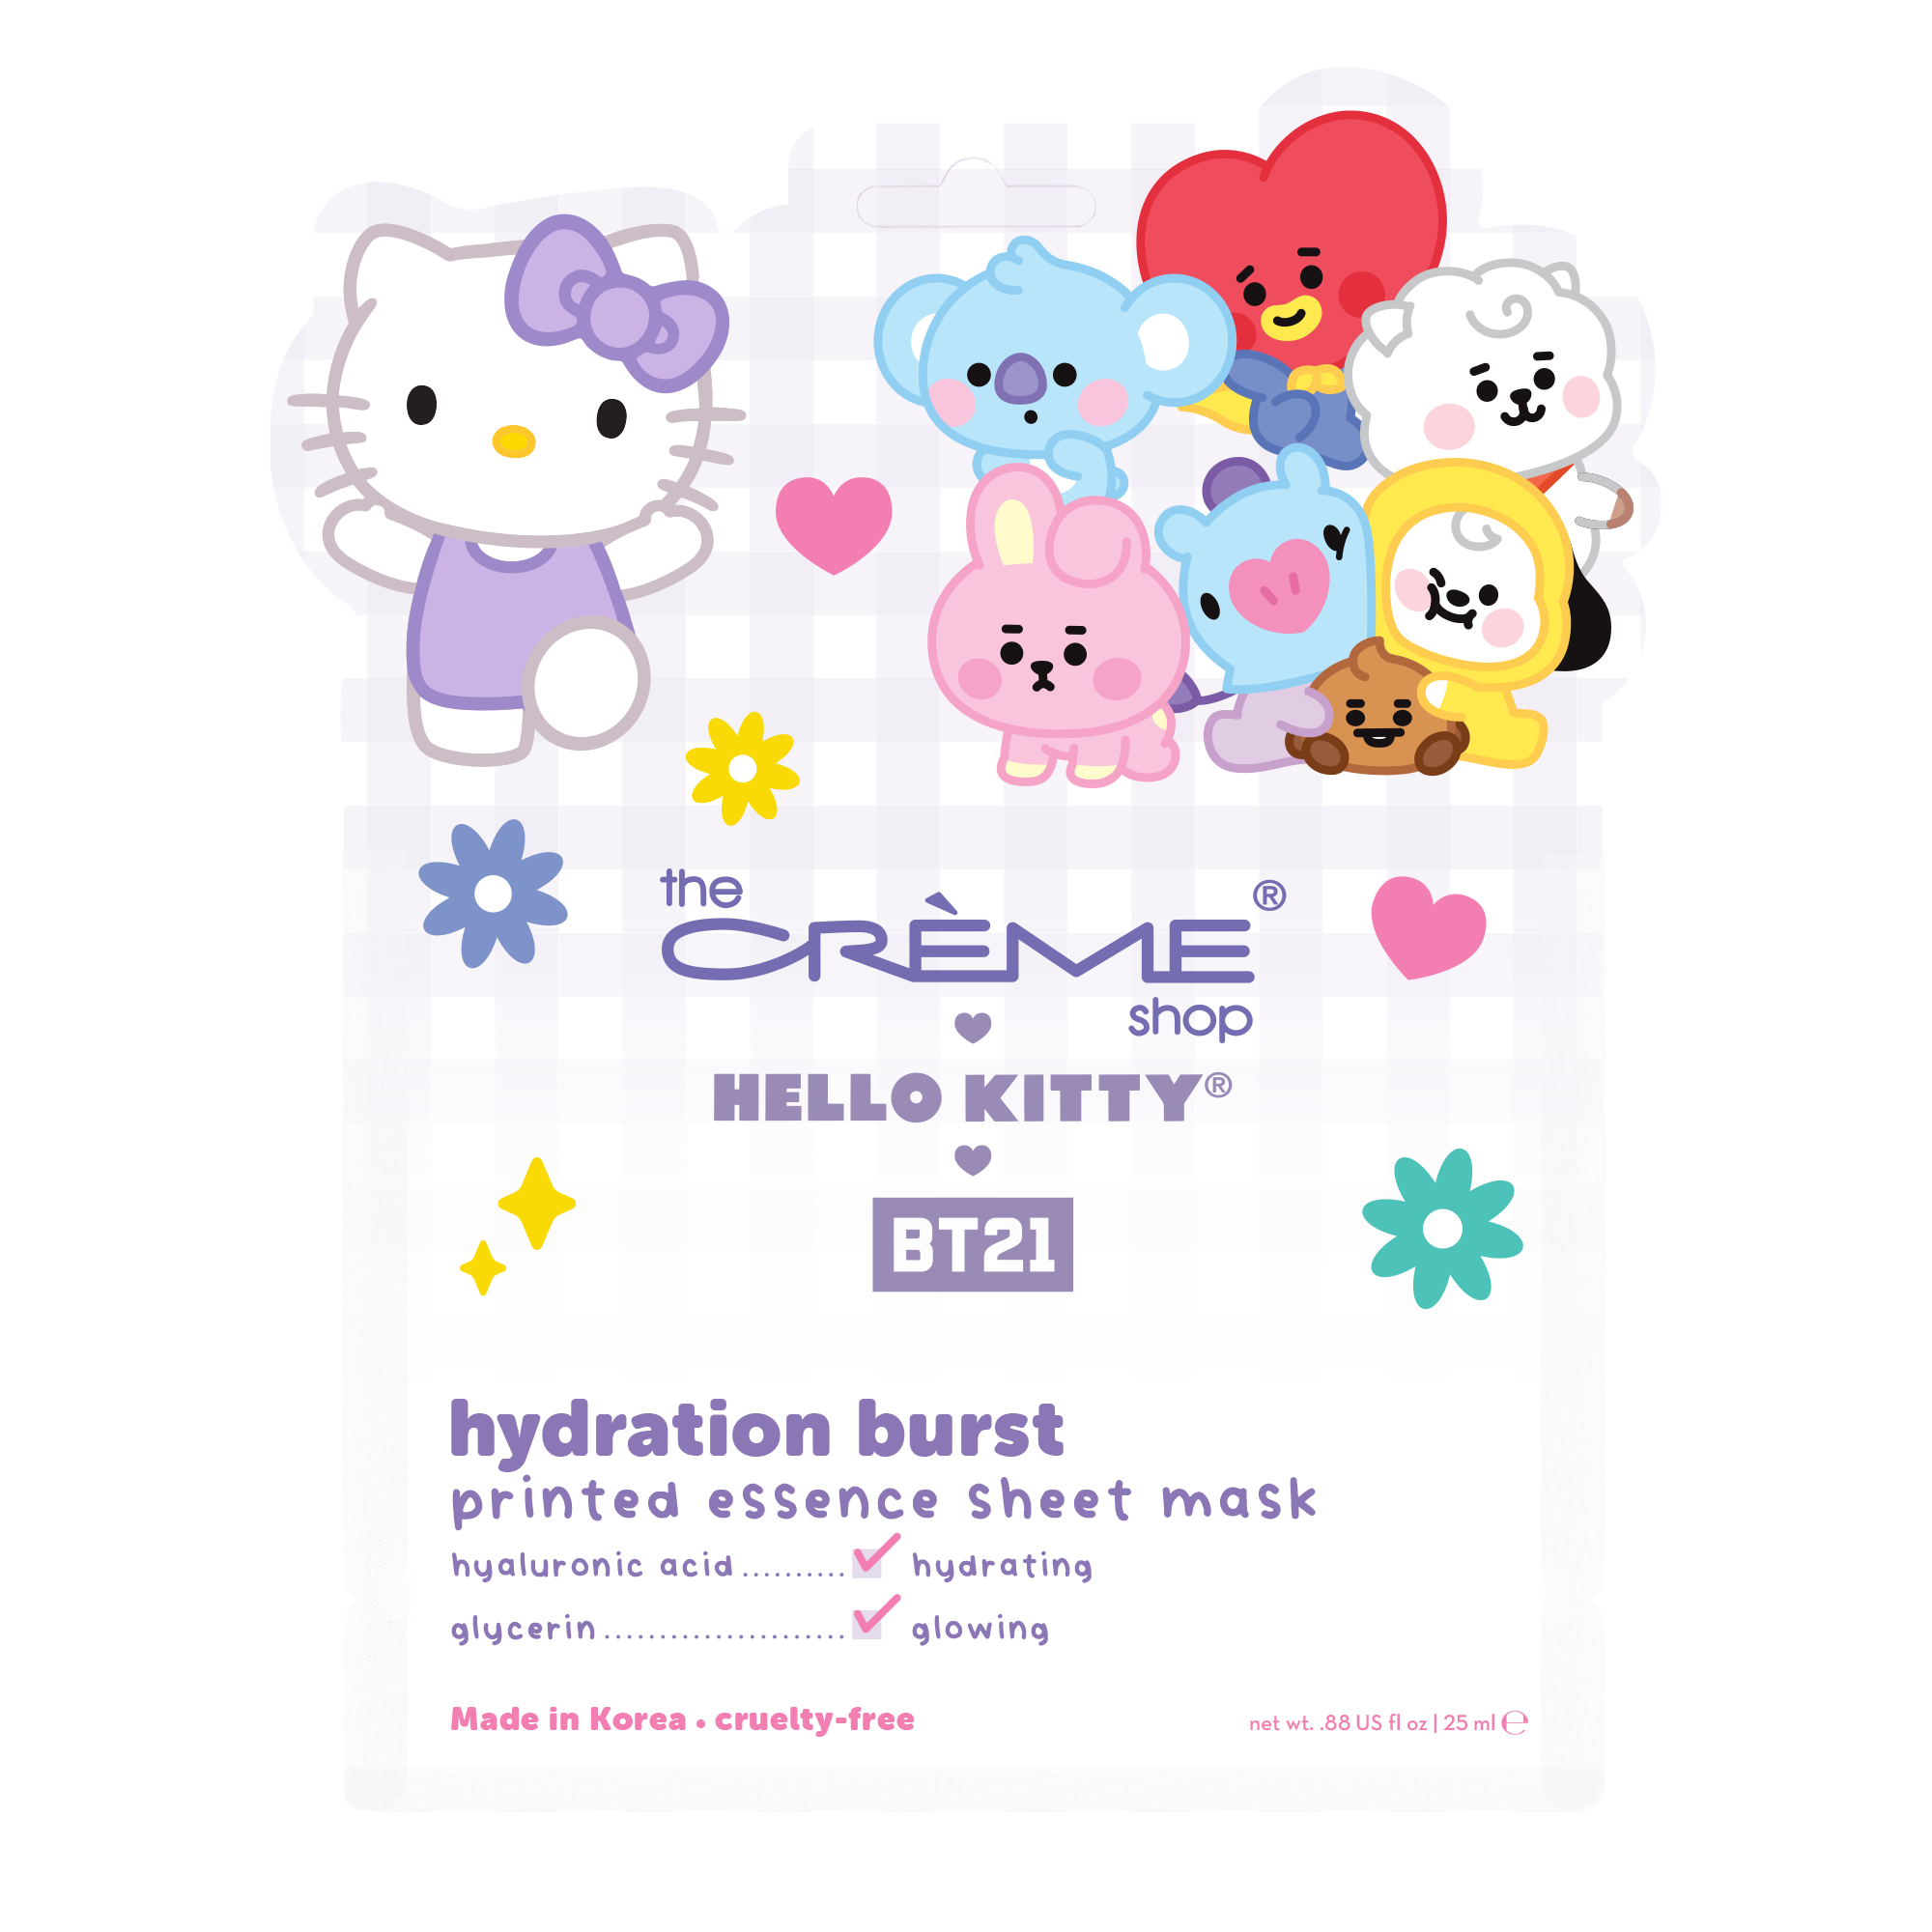 Hello Kitty & BT21 Hydration Burst Printed Essence Sheet Mask Beauty The Crème Shop   